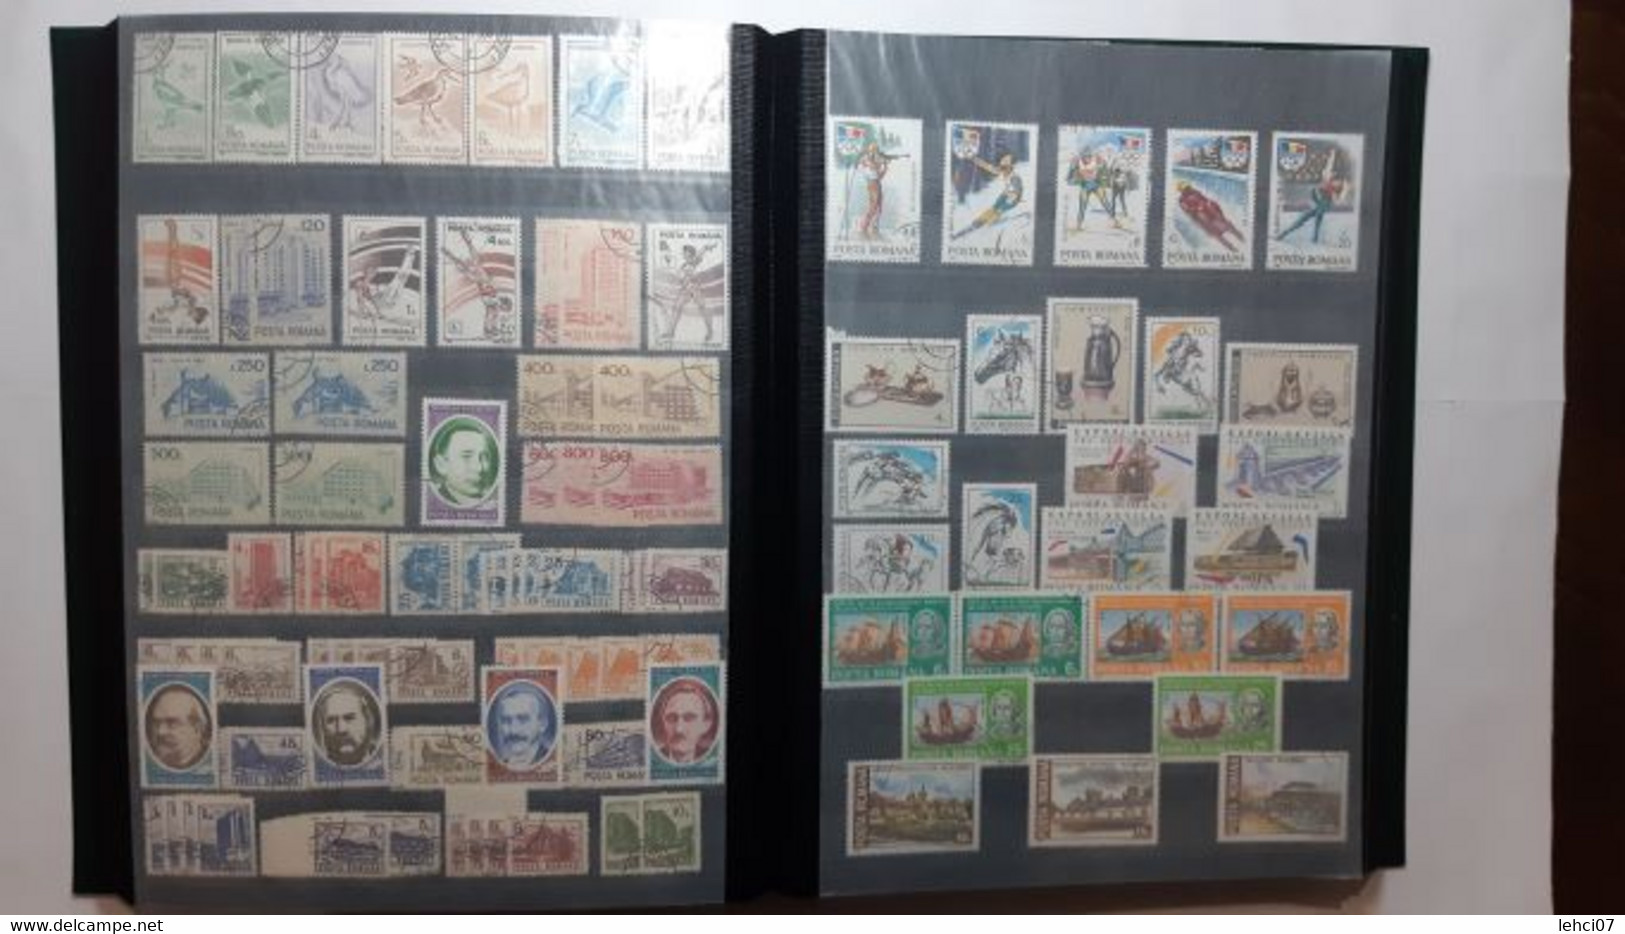 ROUMANIE Intéressante collection importante, d’environ 2 080 timbres